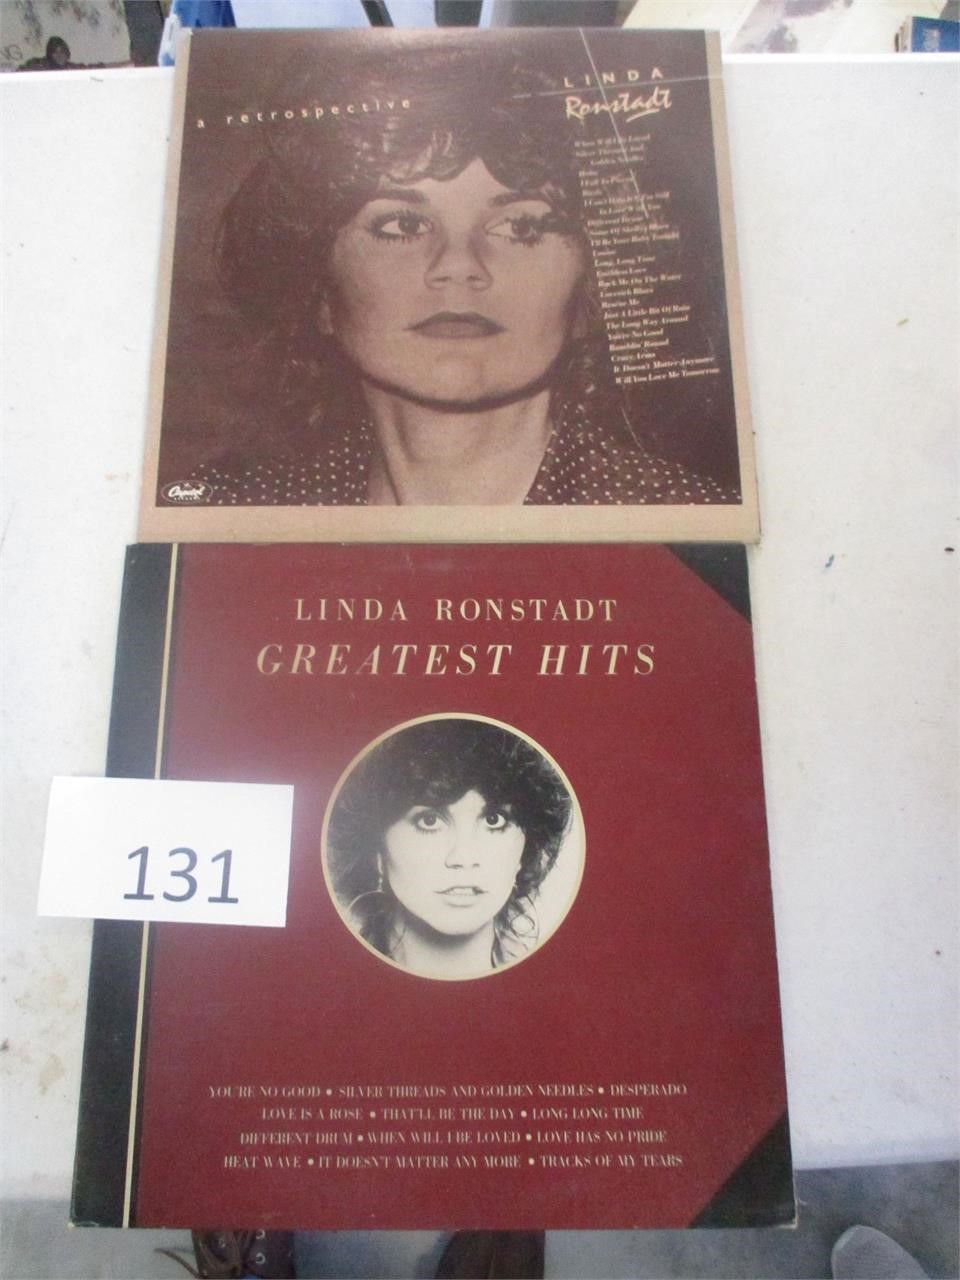 Linda Ronstadt;;Retrospective & Greatest Hits